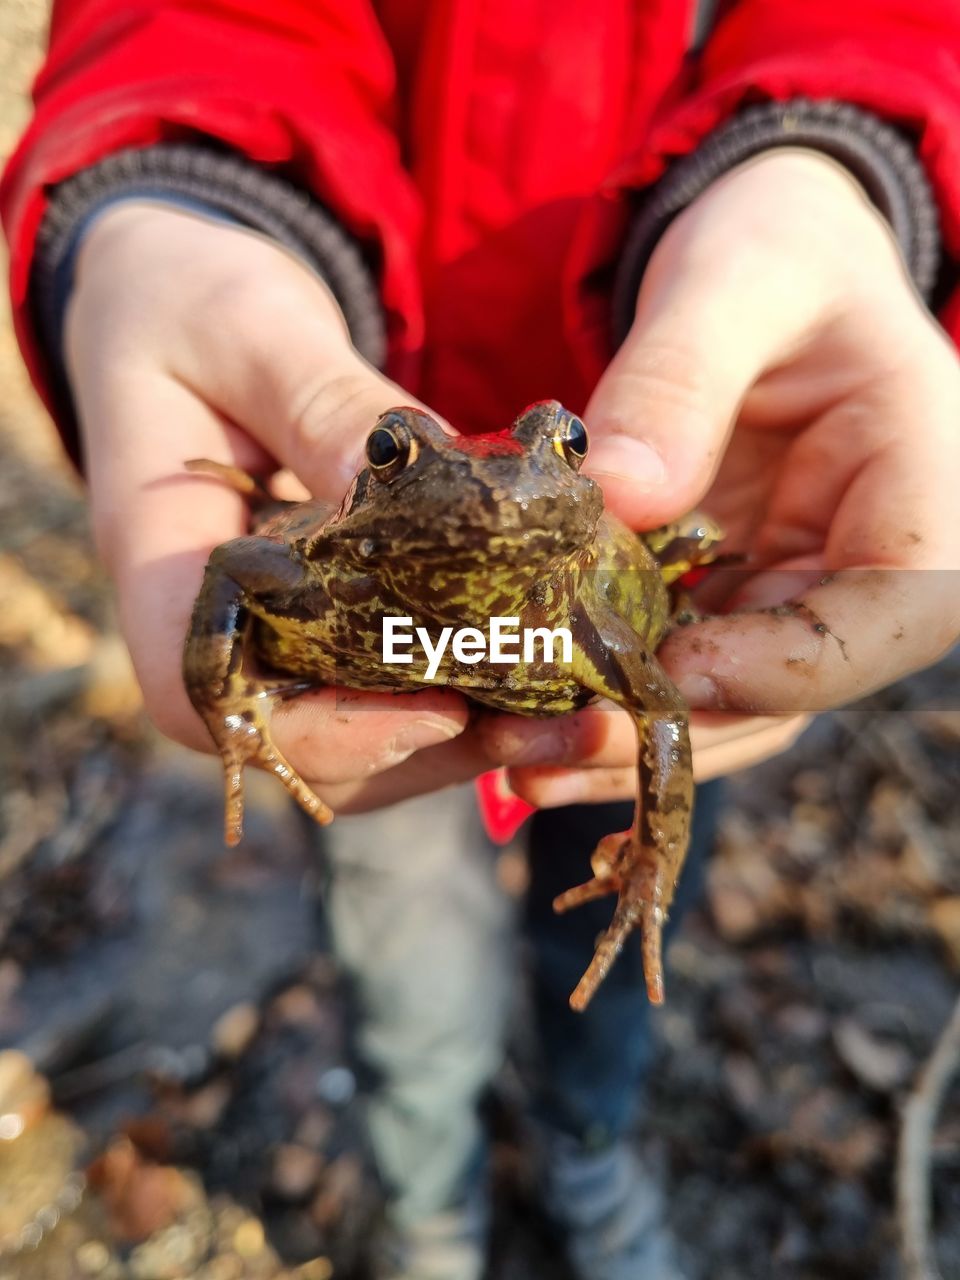 Child holds frog